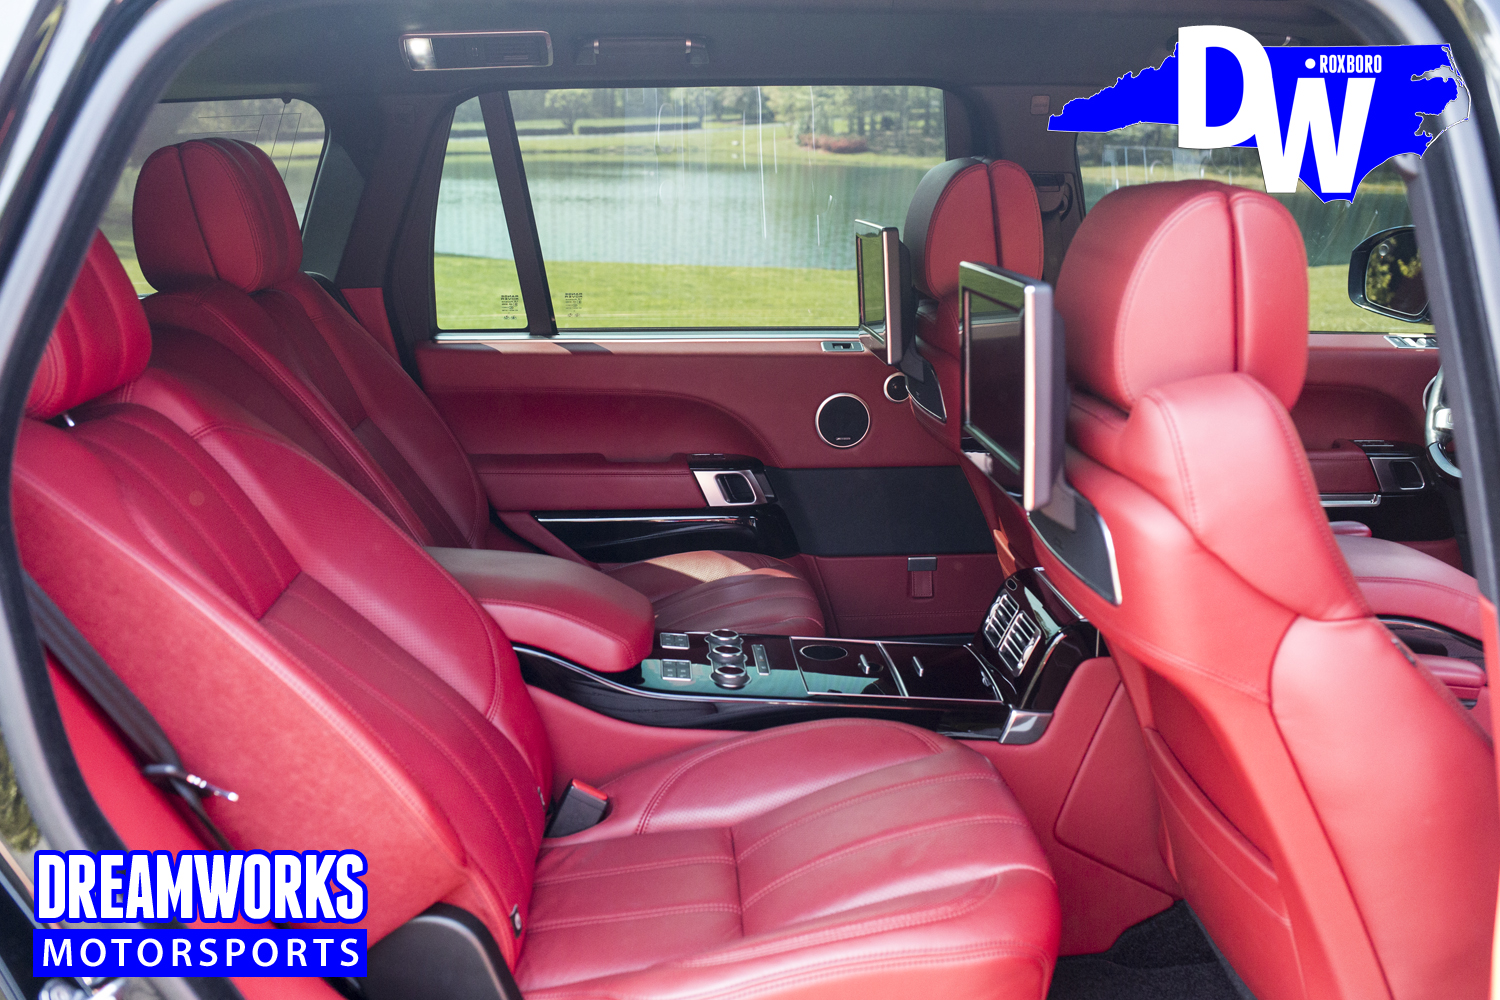 Satin-Black-Range-Rover-Dreamworks-Motorsports-interior-3.jpg